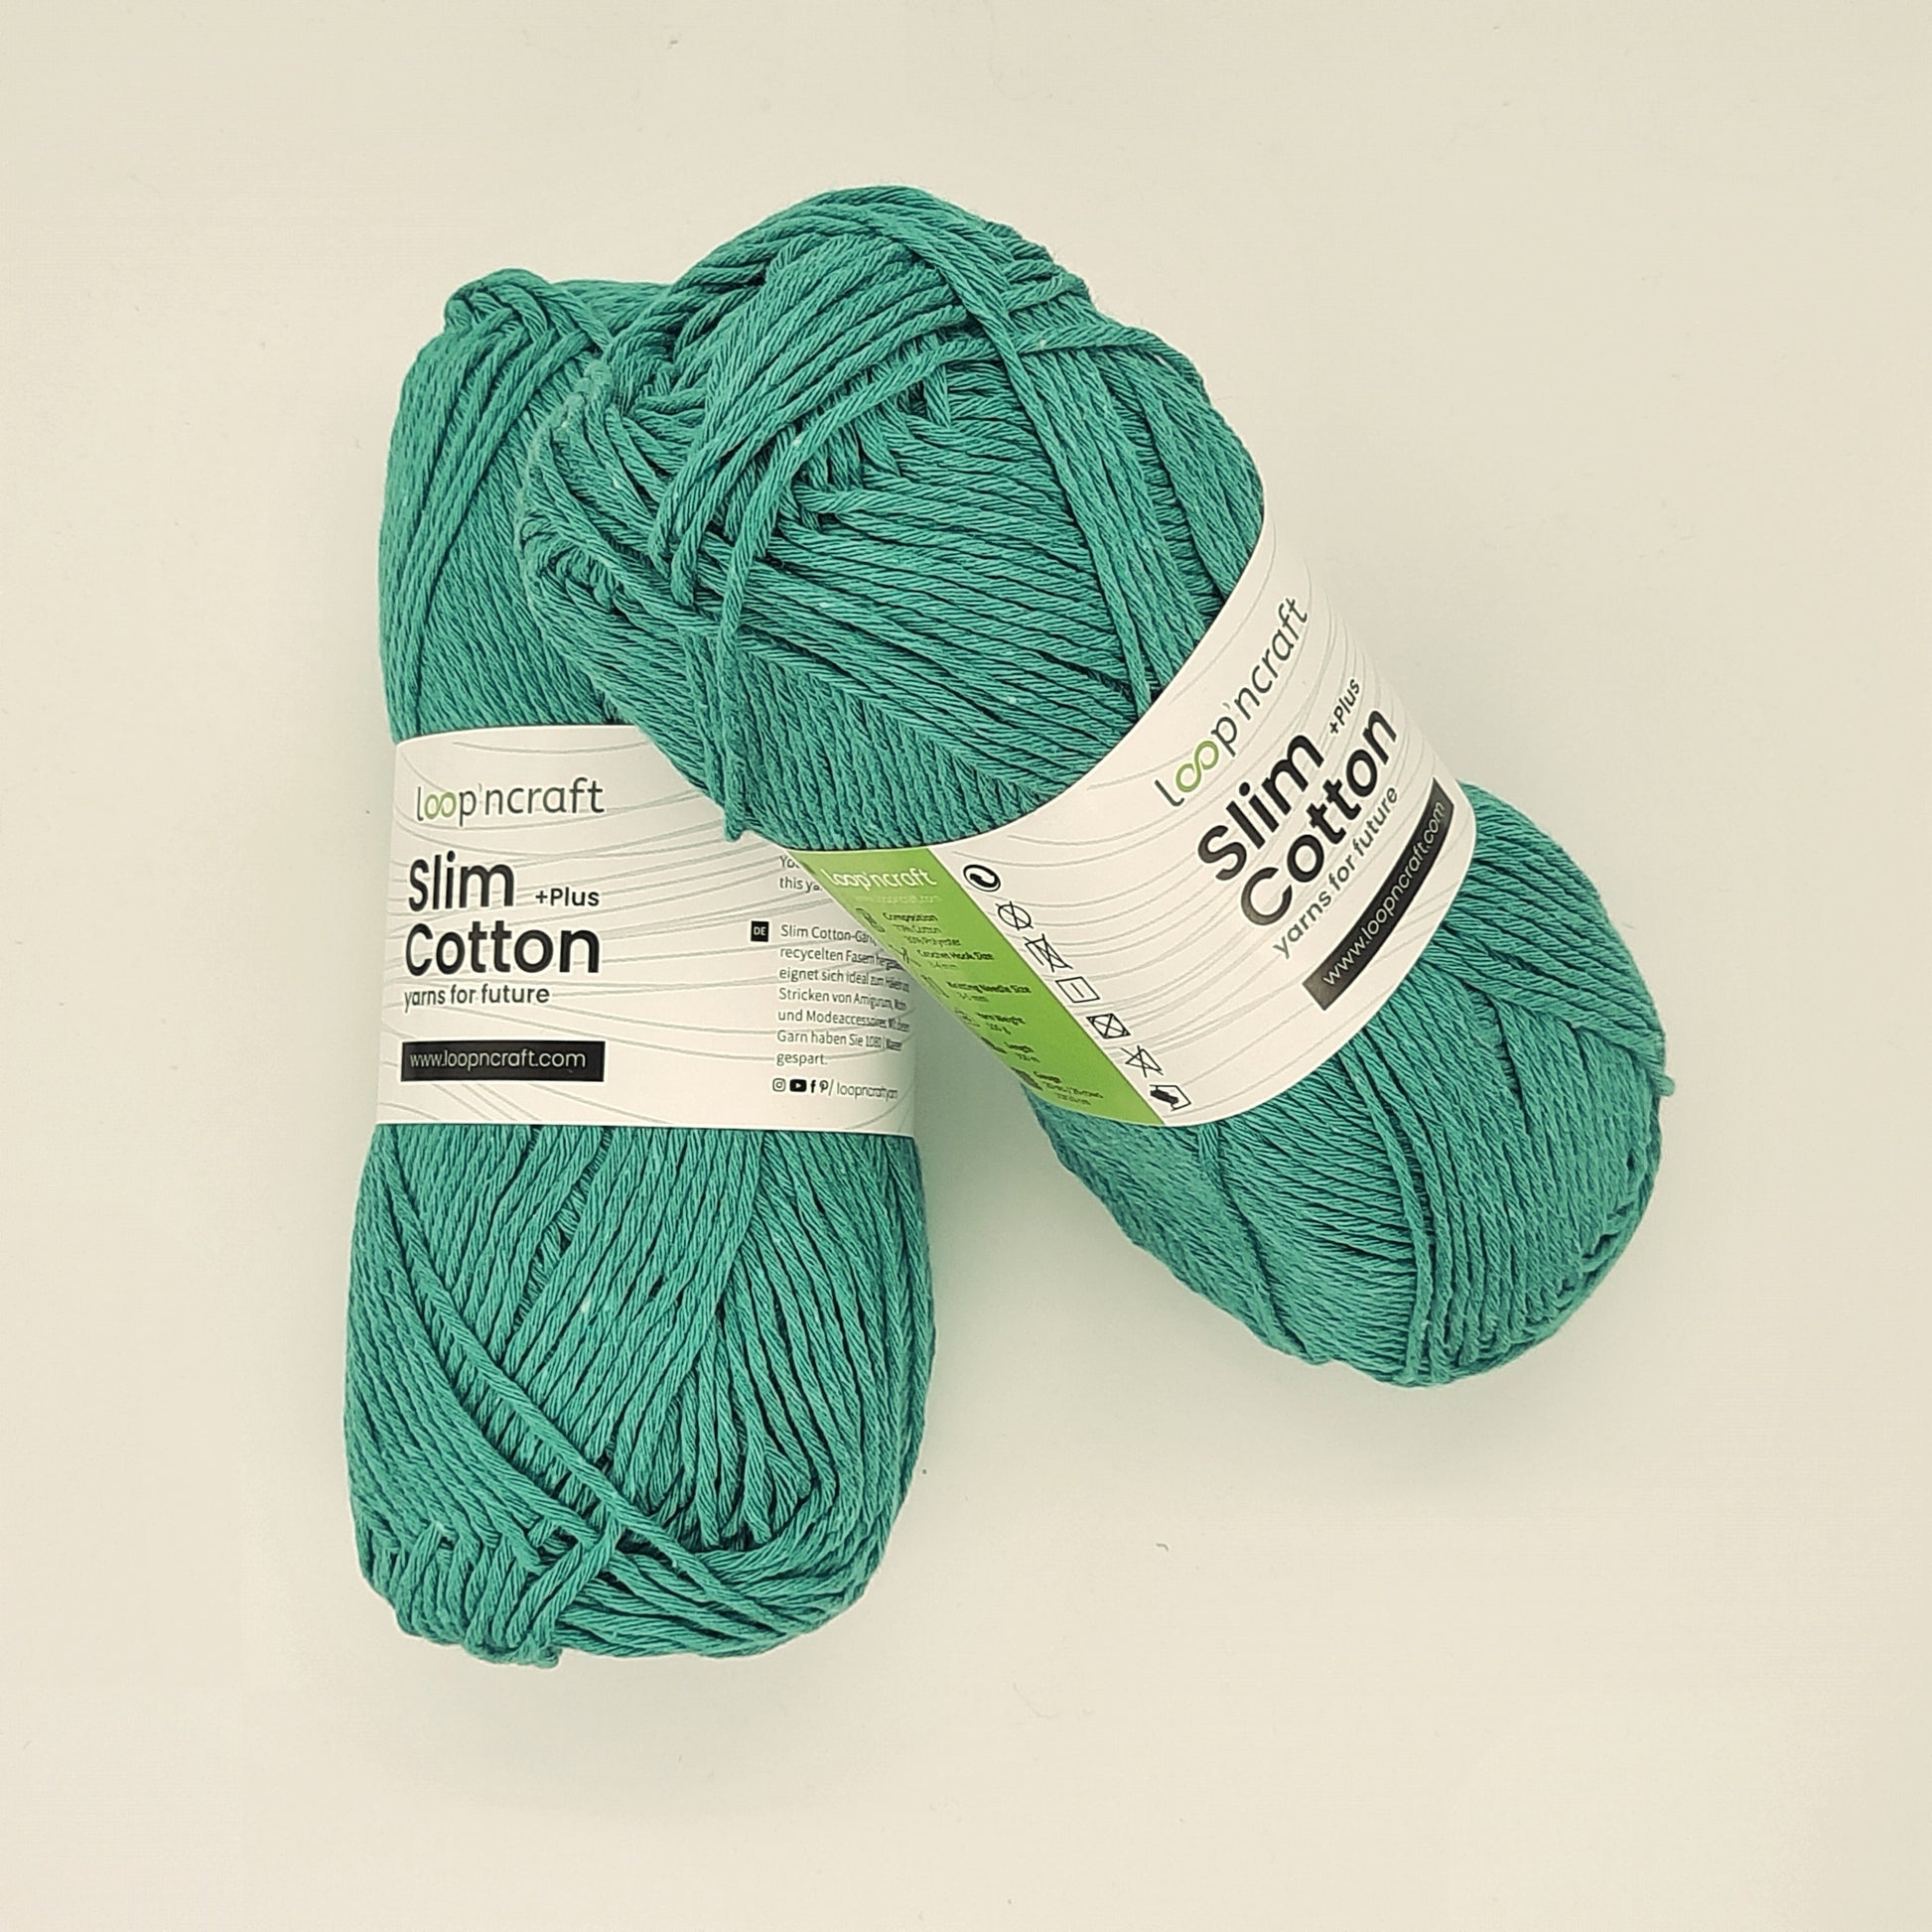 Recycled Yarn - Mint Green